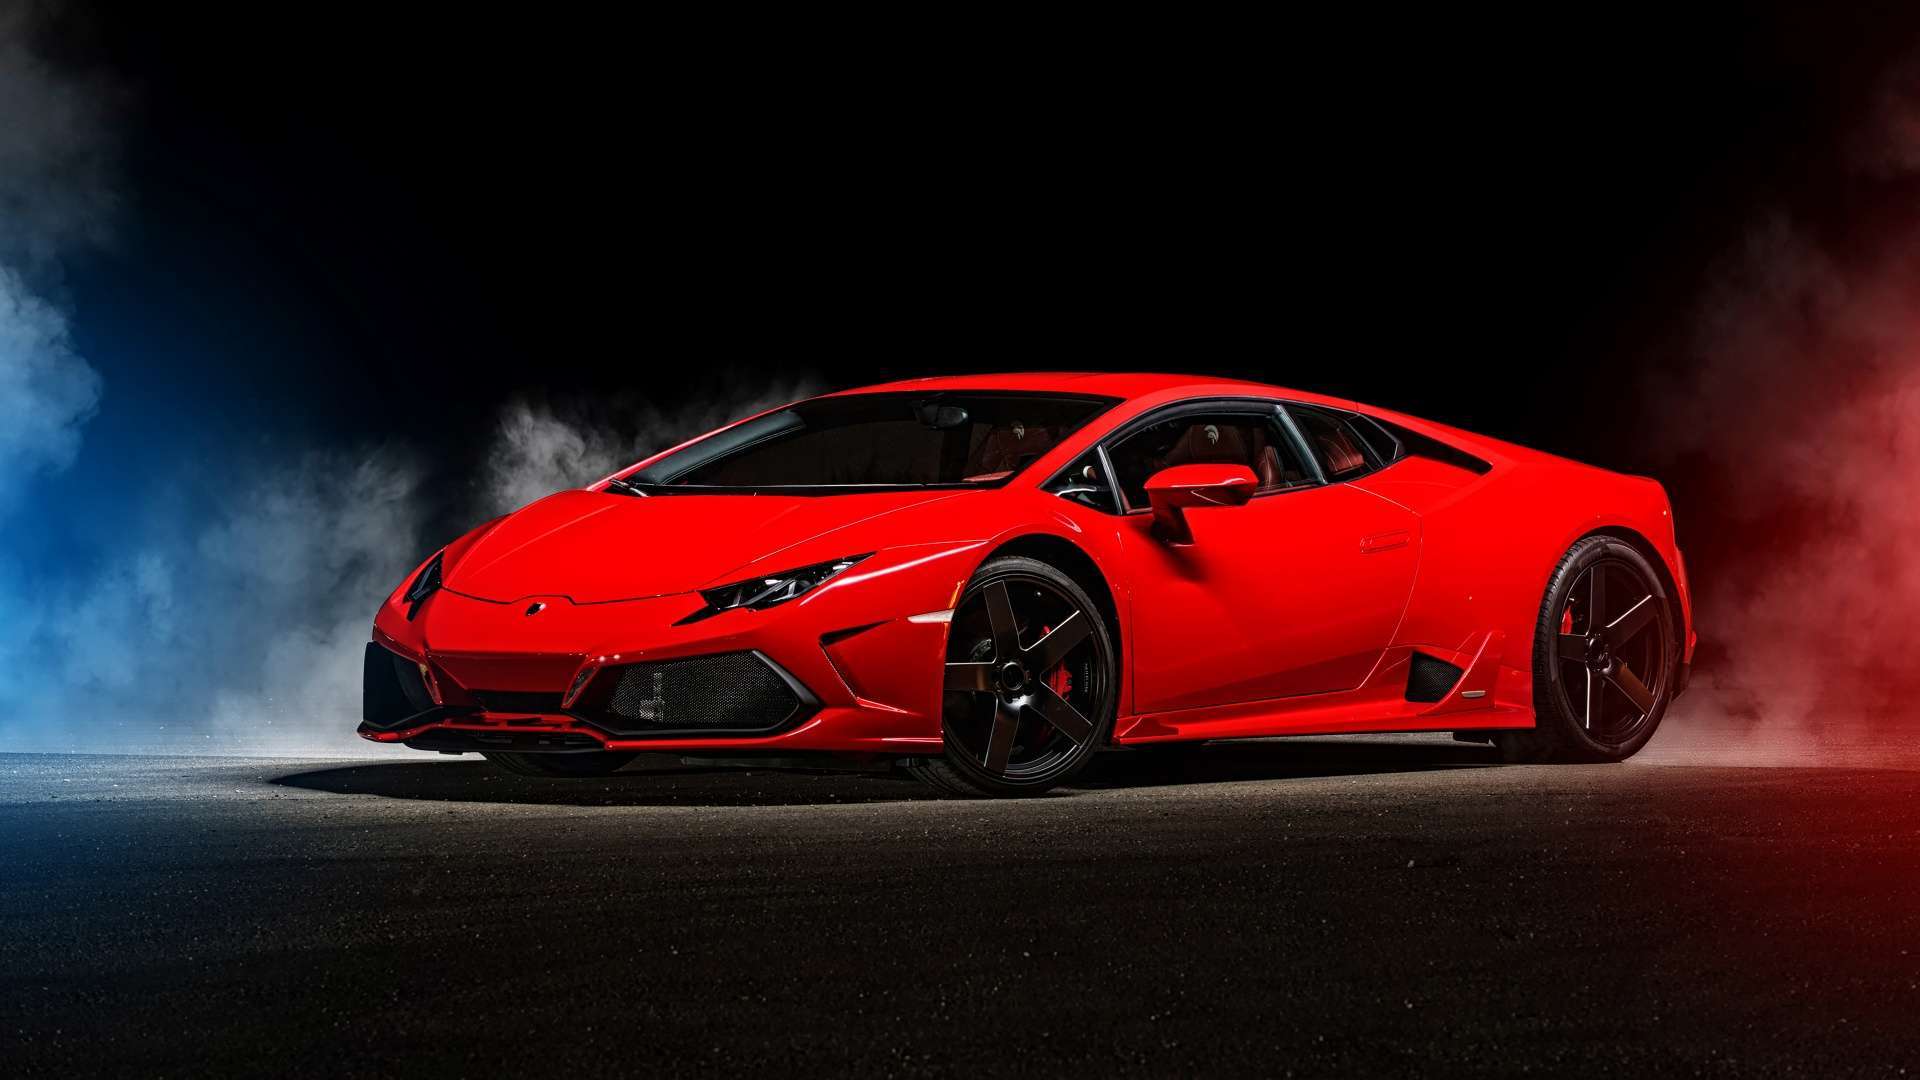 Red Lamborghini Huracan HD Wallpaper 1080p HDwallwide